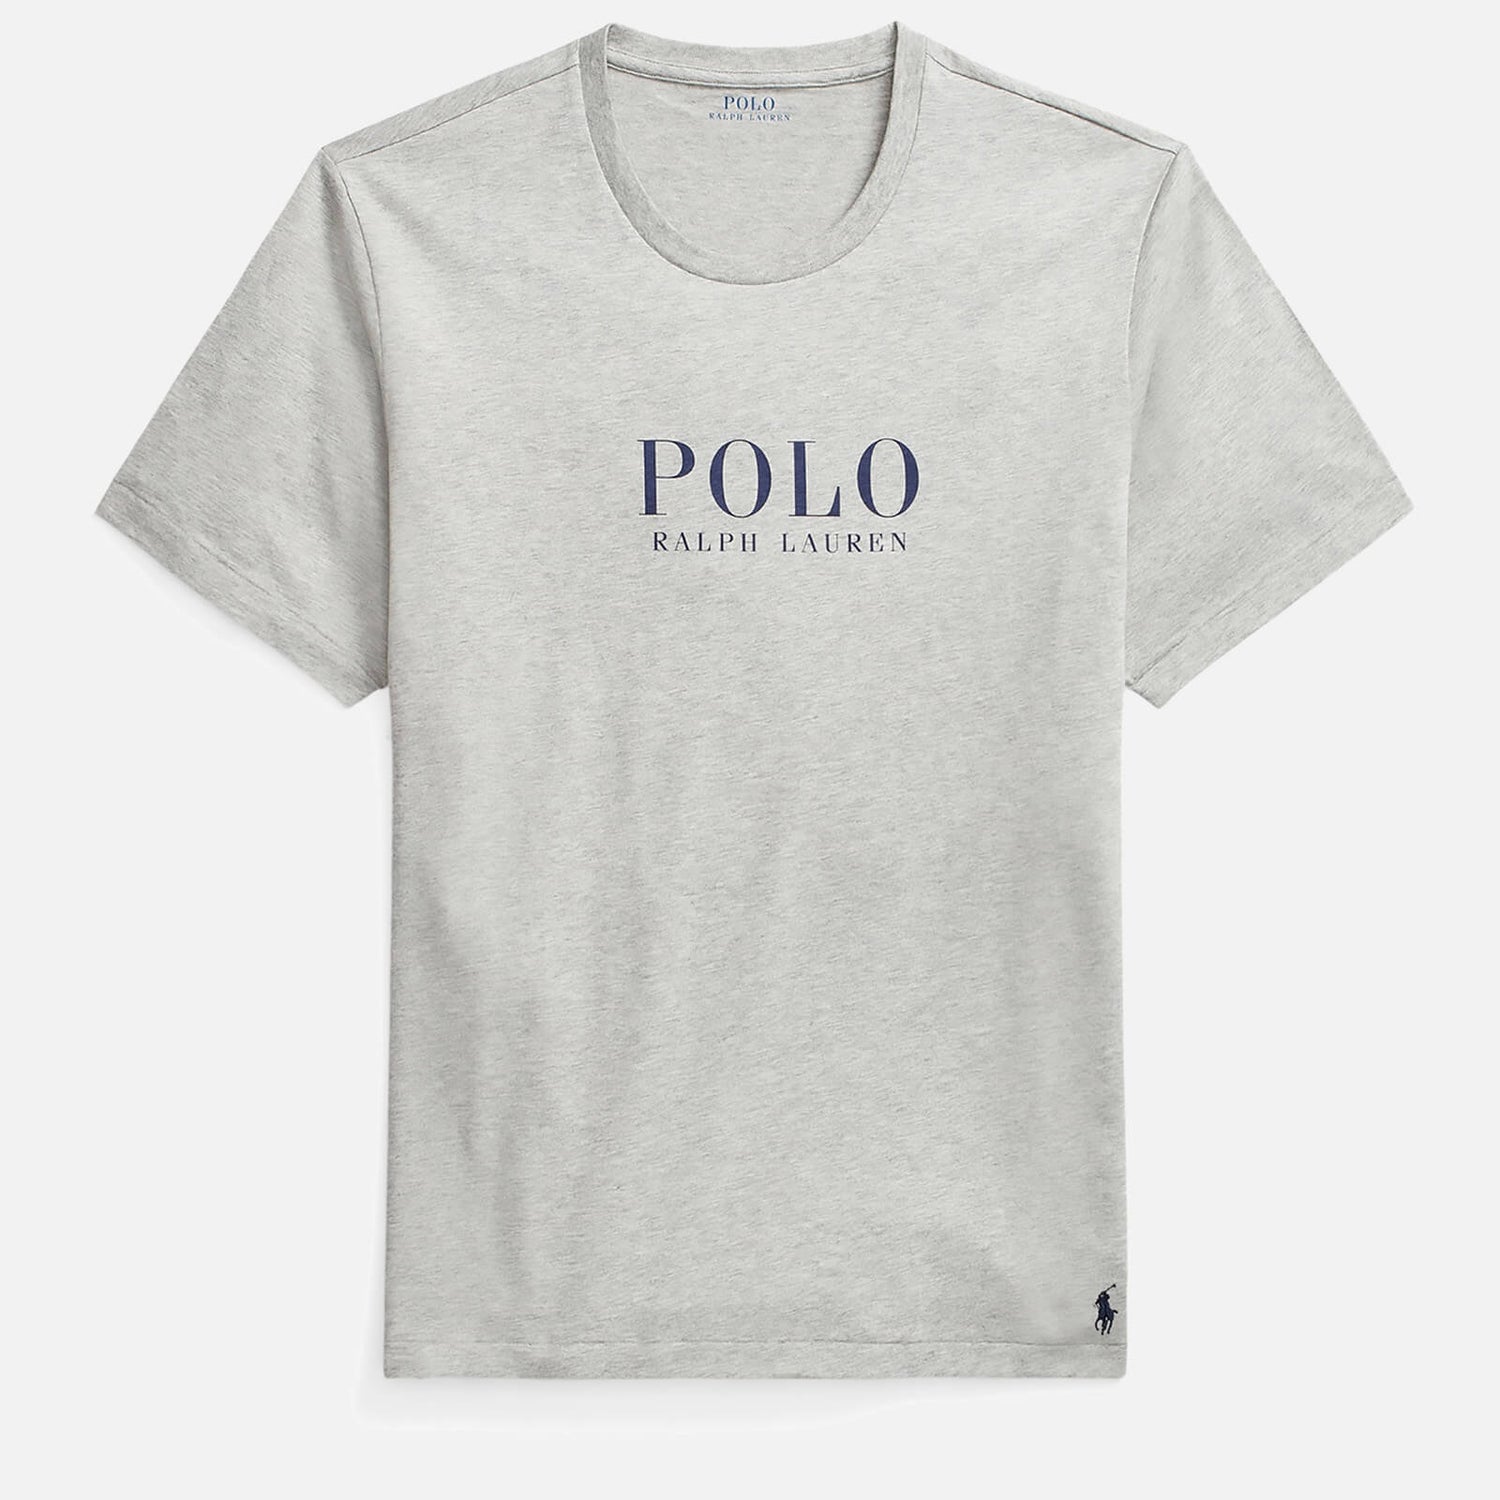 Polo Ralph Lauren Men's Boxed Logo T-Shirt - Andover Heather - M